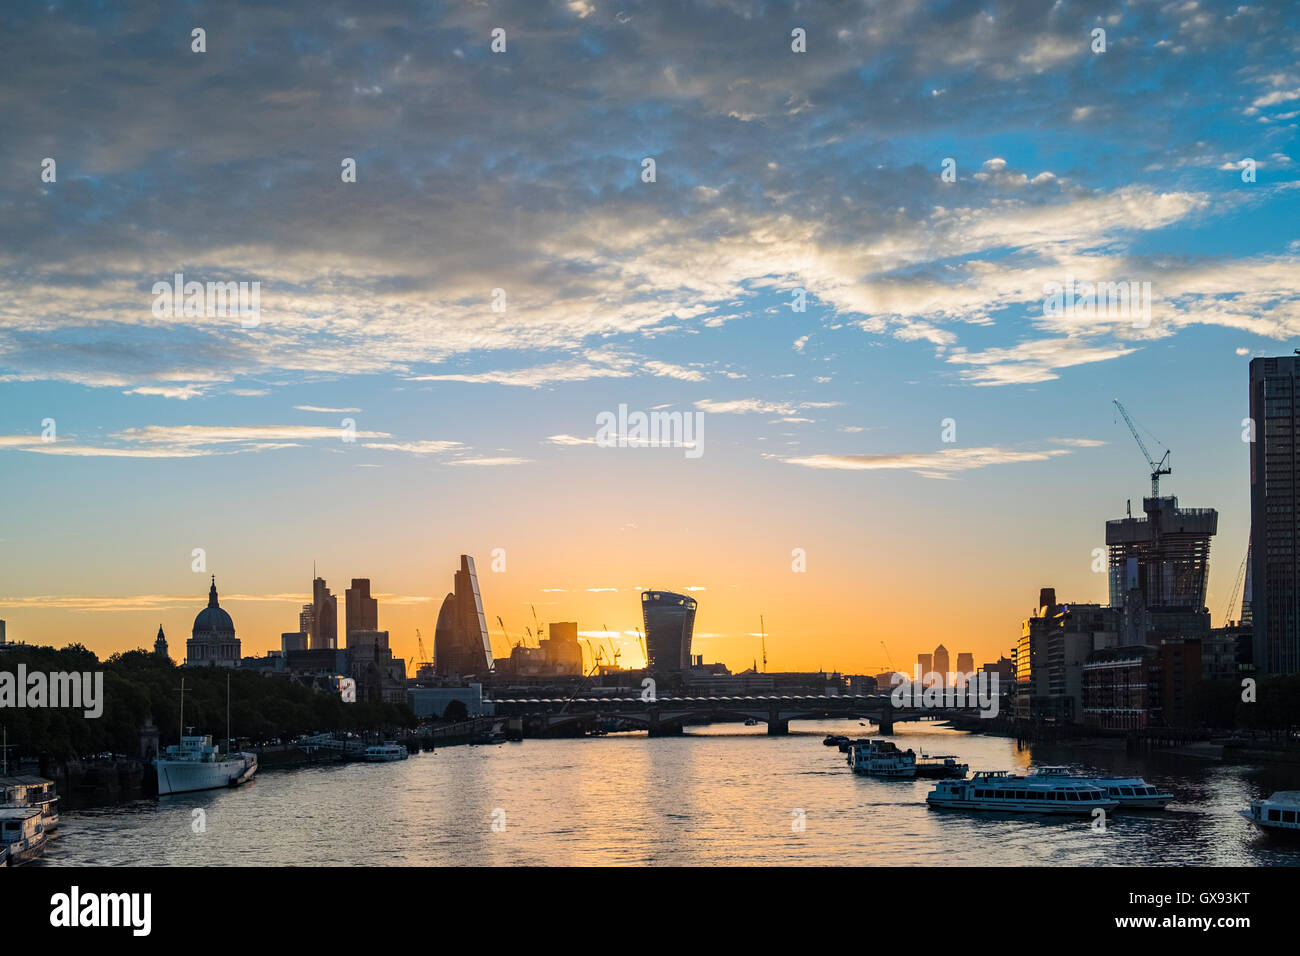 Sunrise over the City of London&River Thames, London, England, U.K. Stock Photo